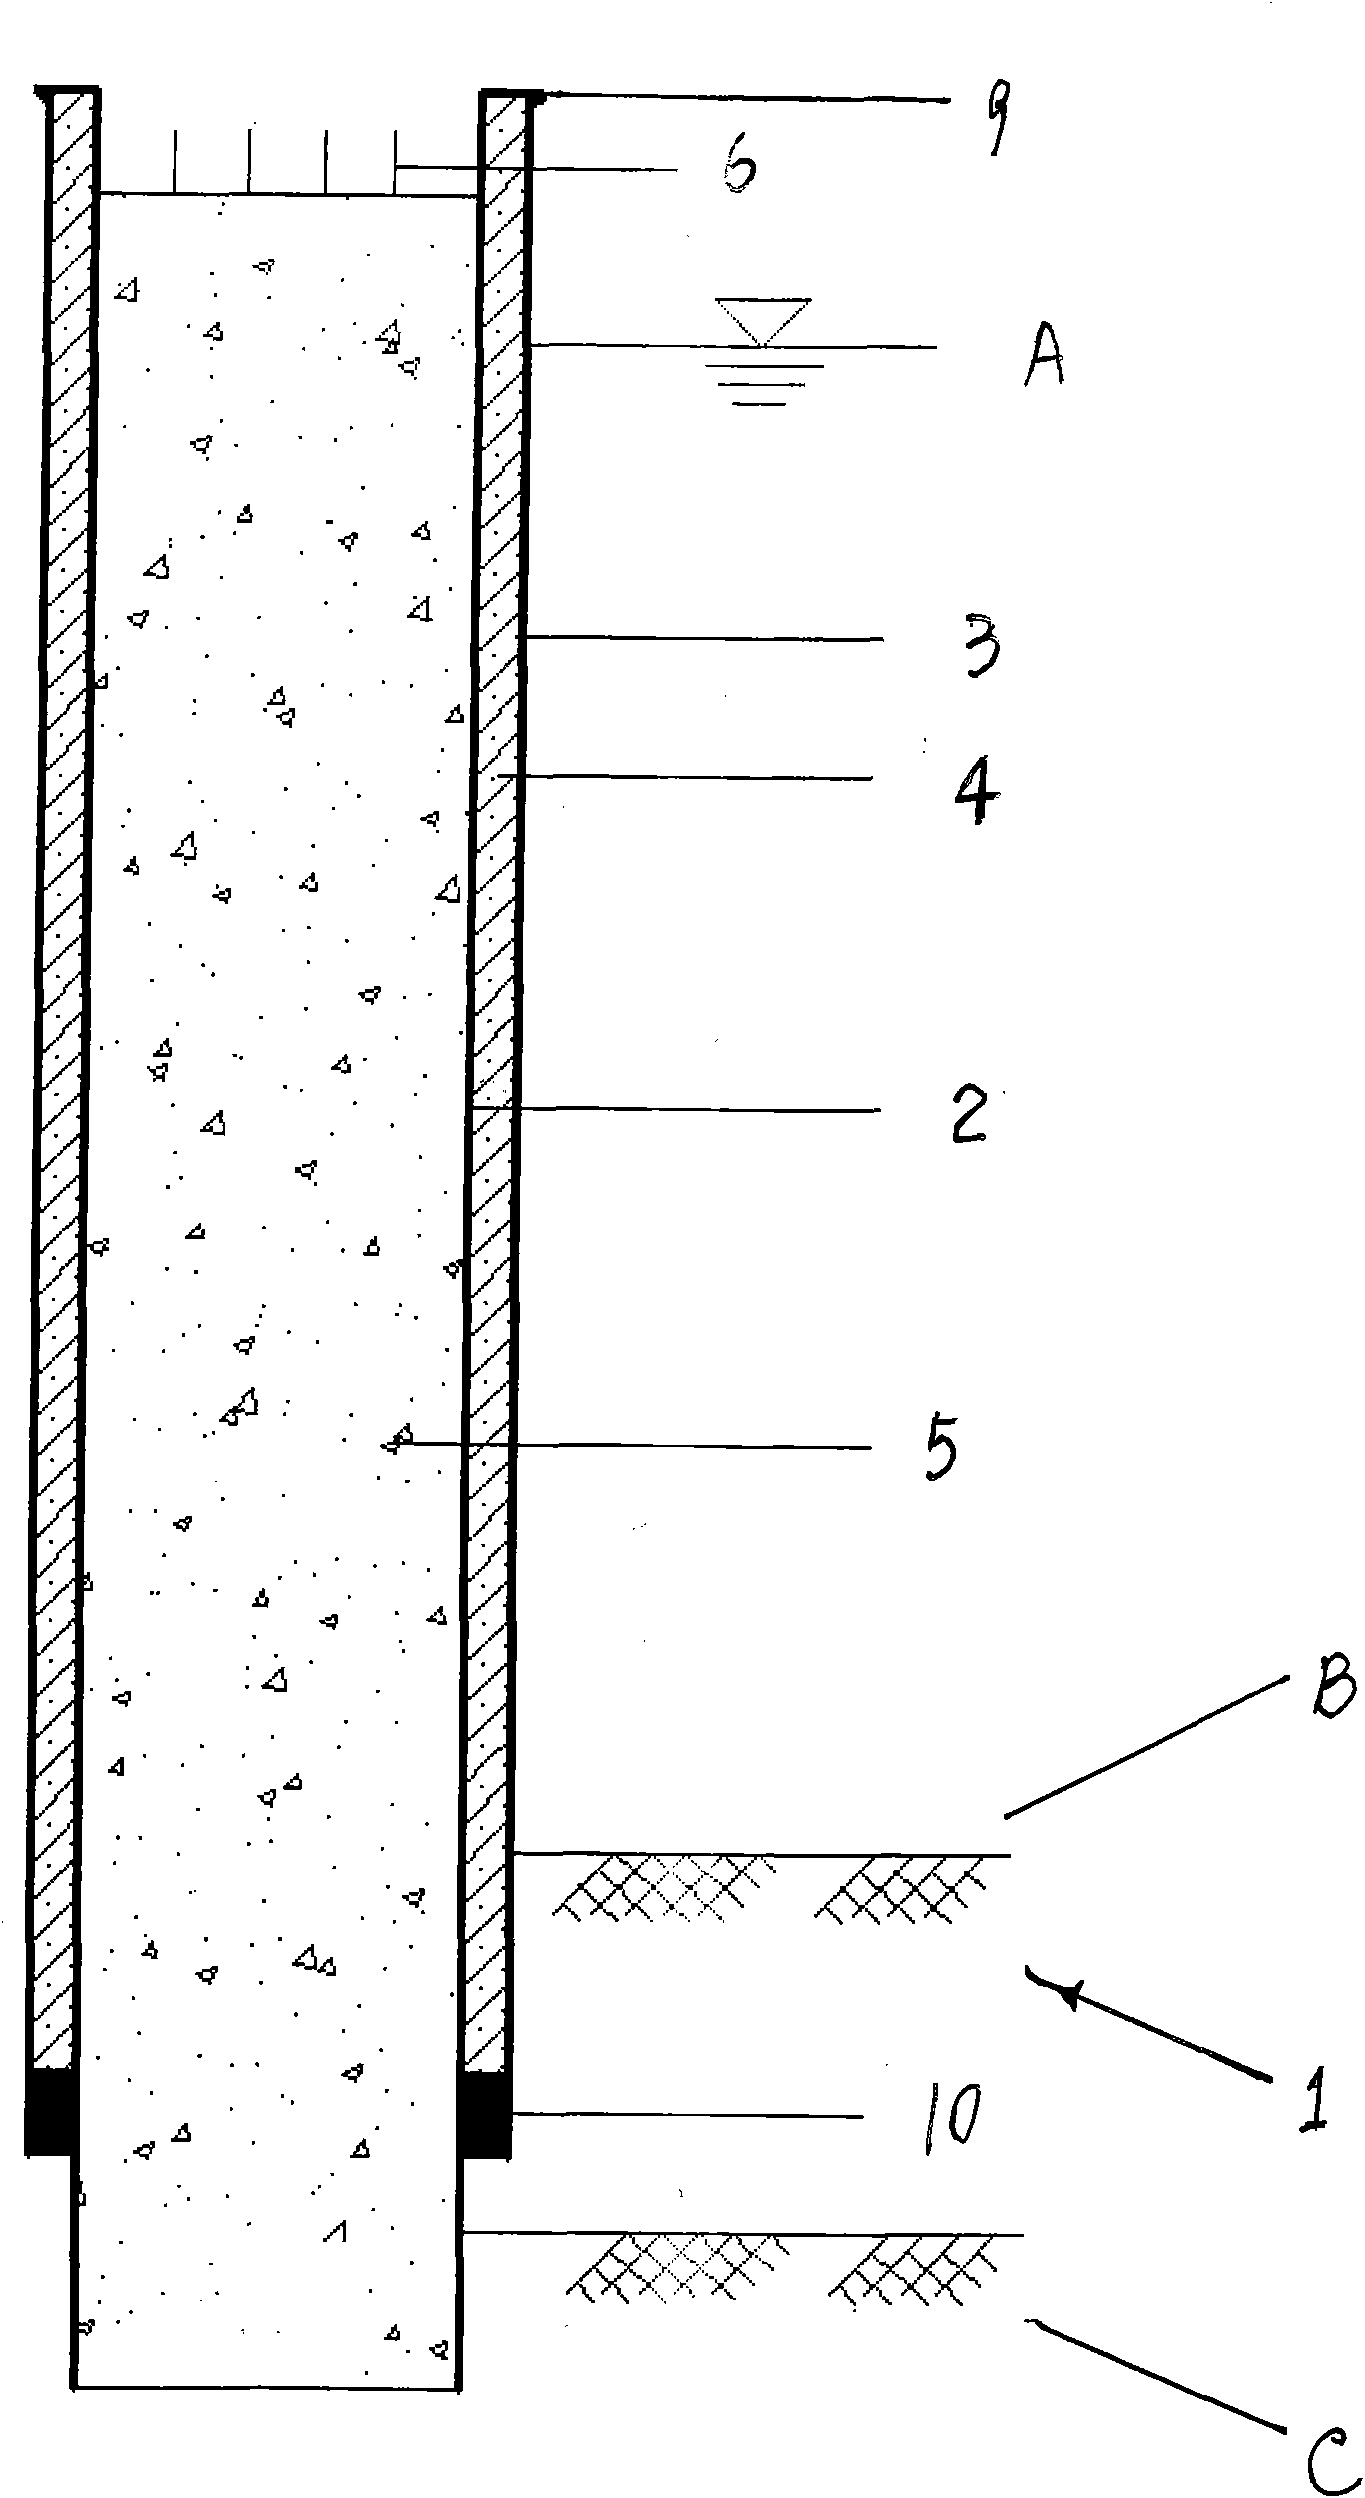 Construction method of concrete filling piles